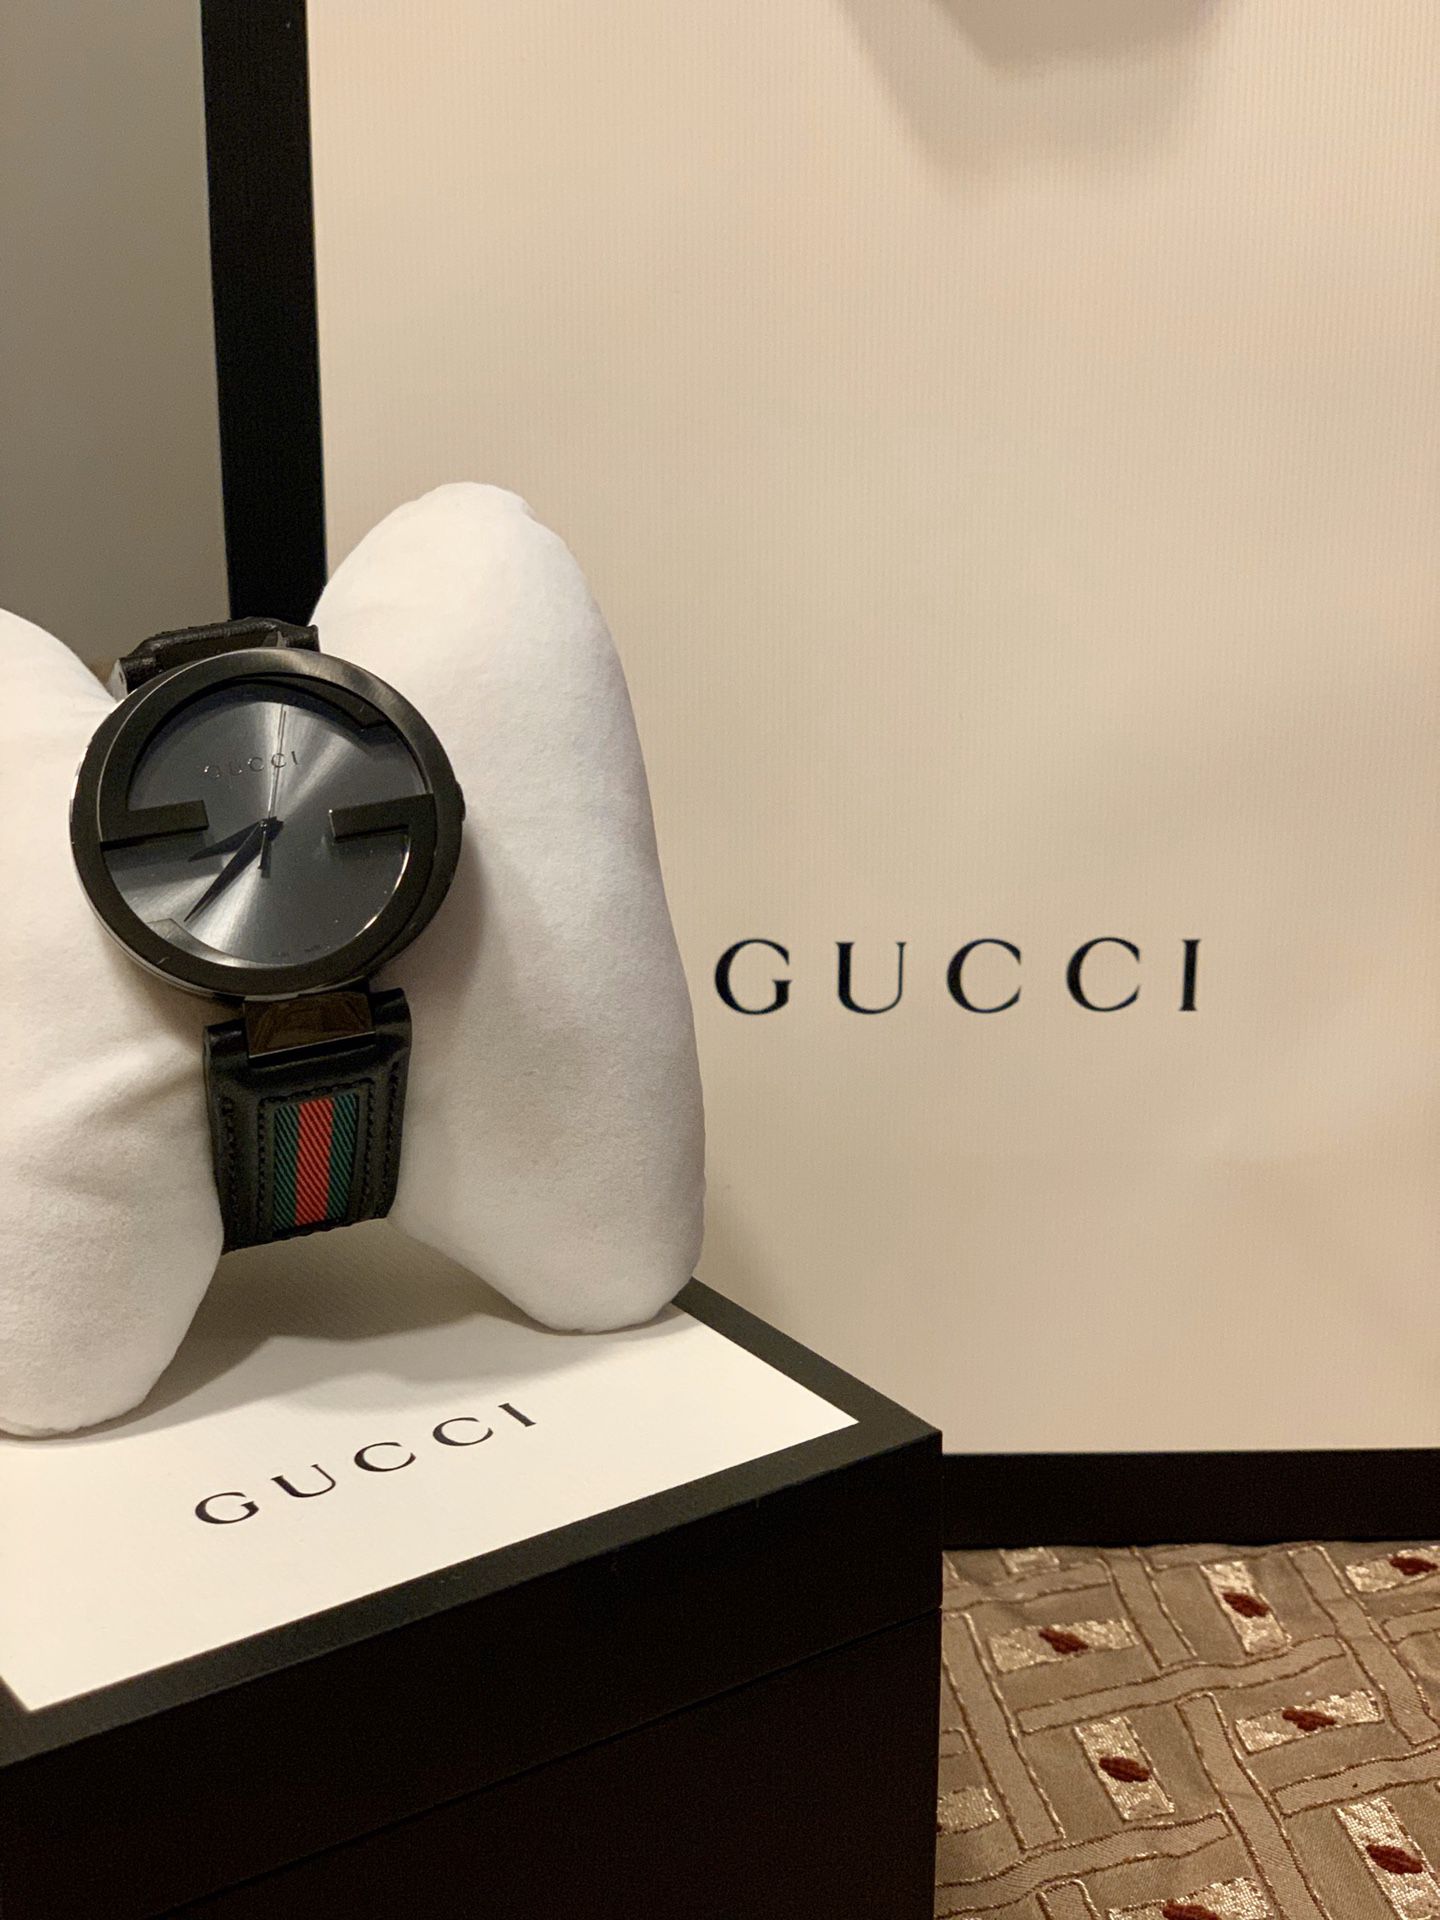 Brand new Gucci men’s watch